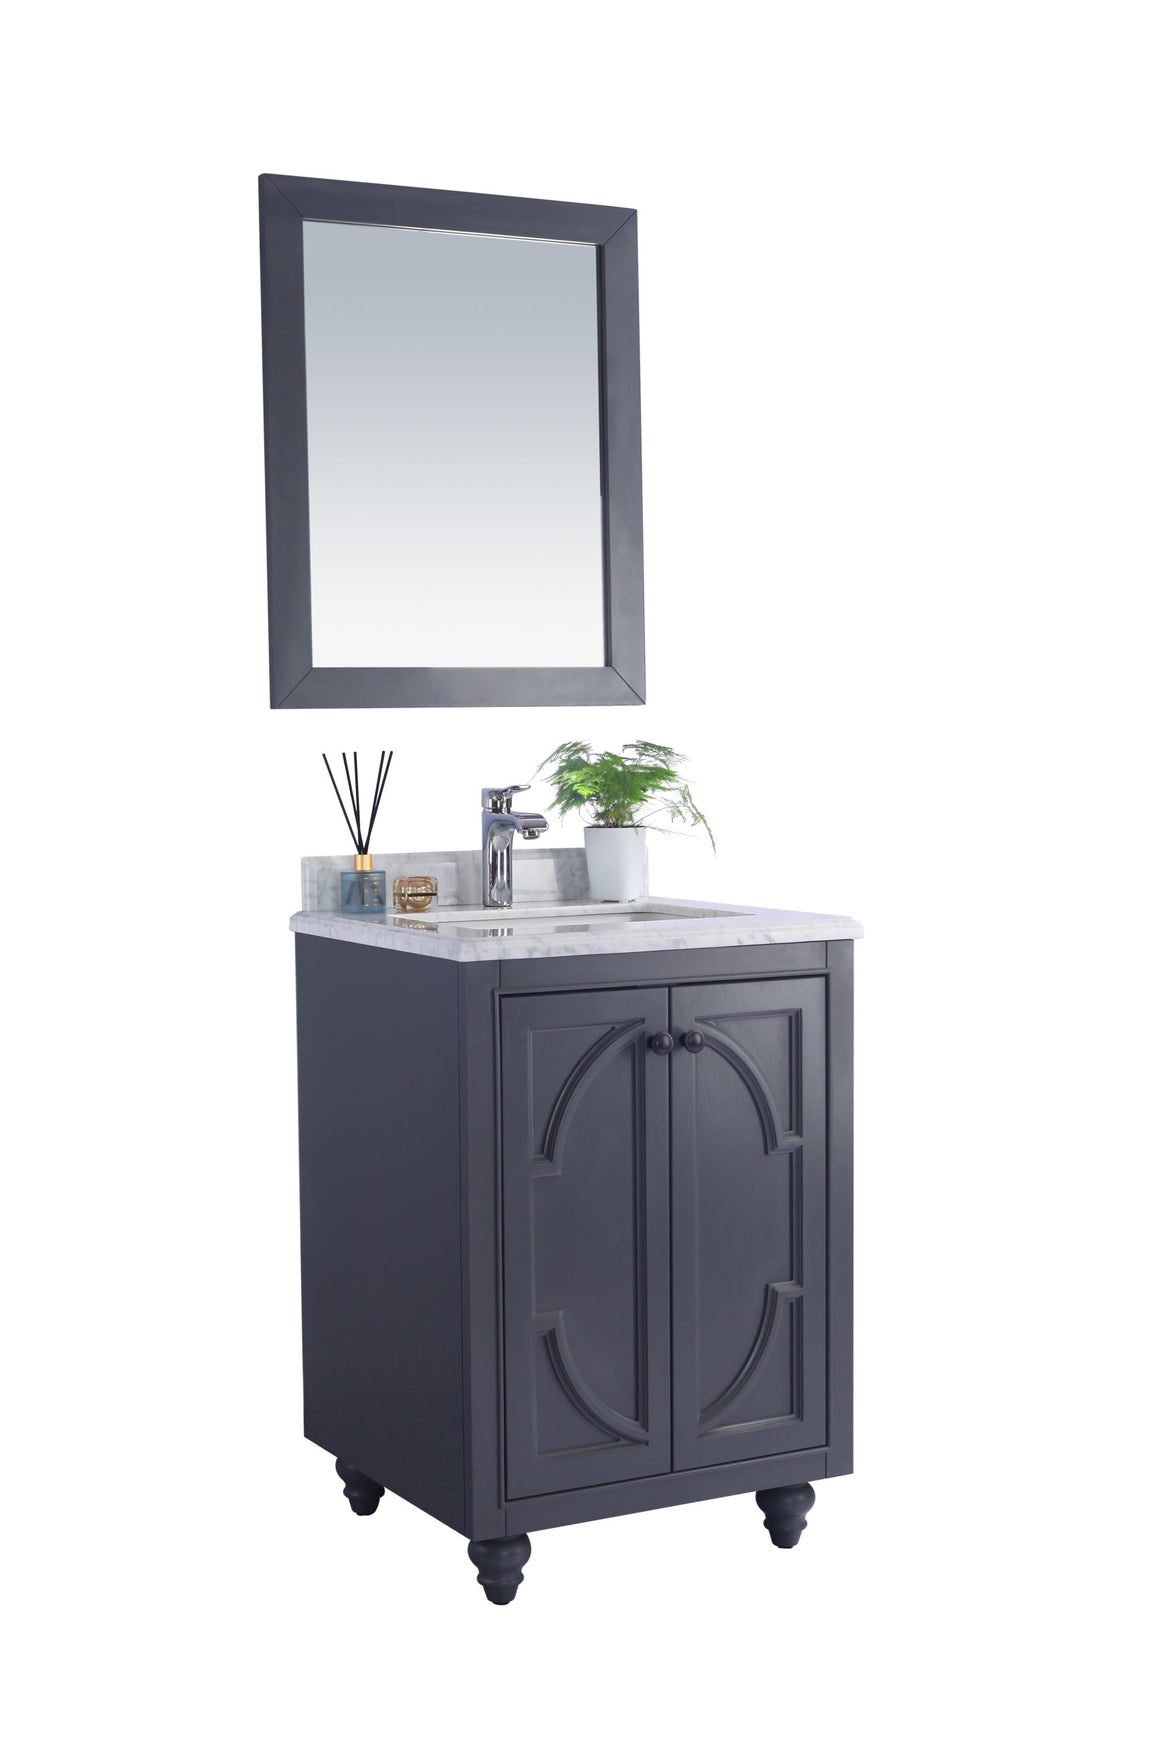 Odyssey - 24 - Maple Grey Cabinet + White Carrara Marble Countertop